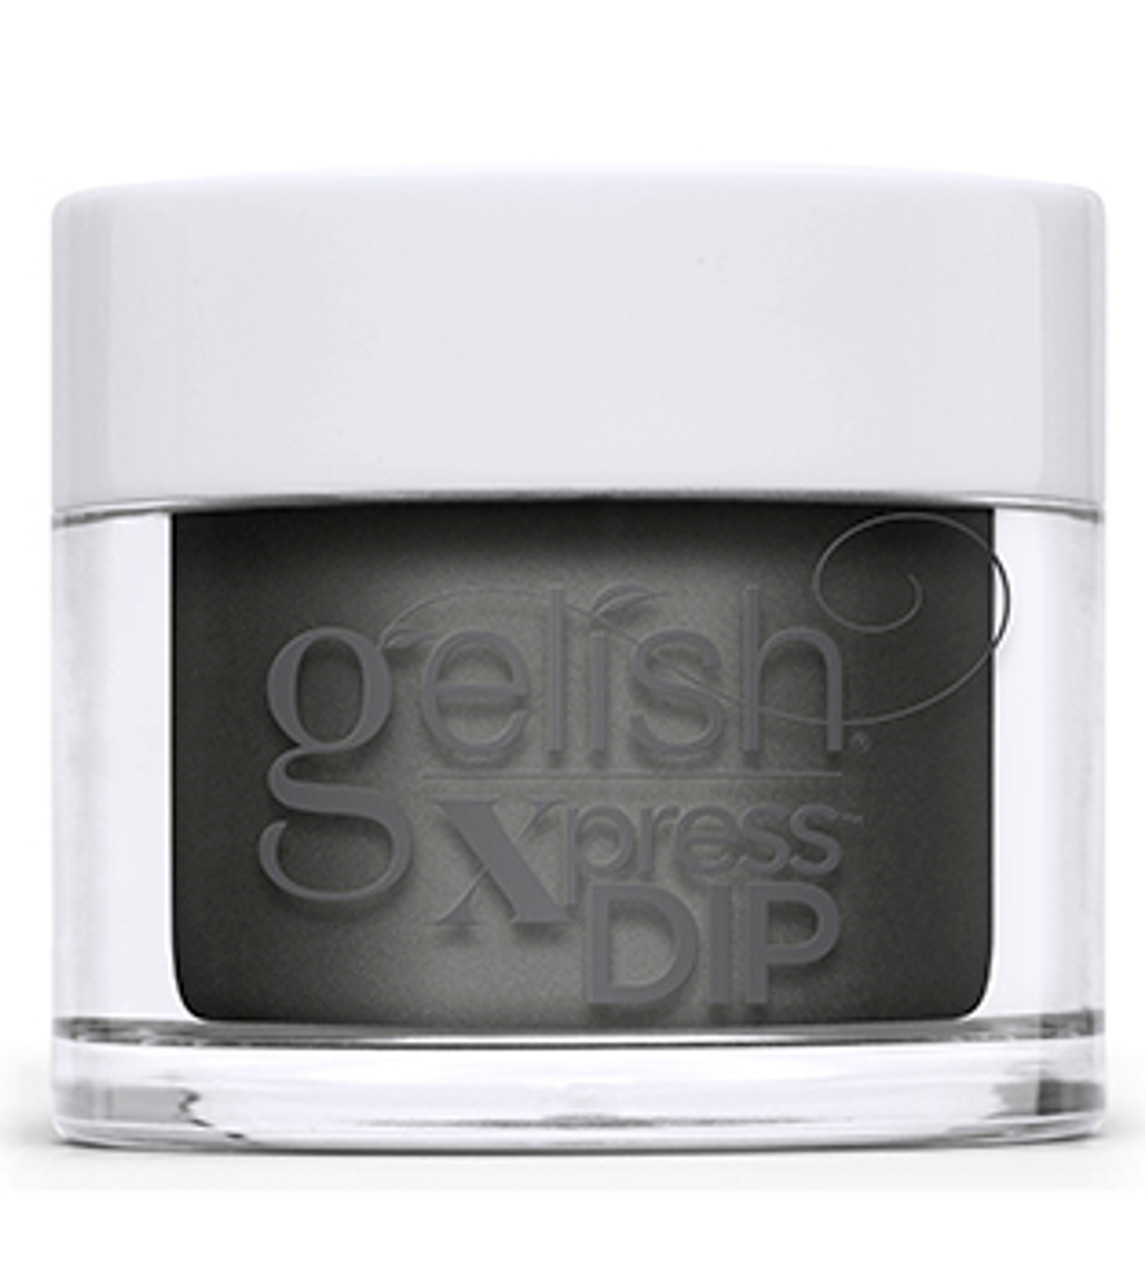 Gelish Xpress Dip Fa-La-Love That Color - 1.5 oz / 43 g